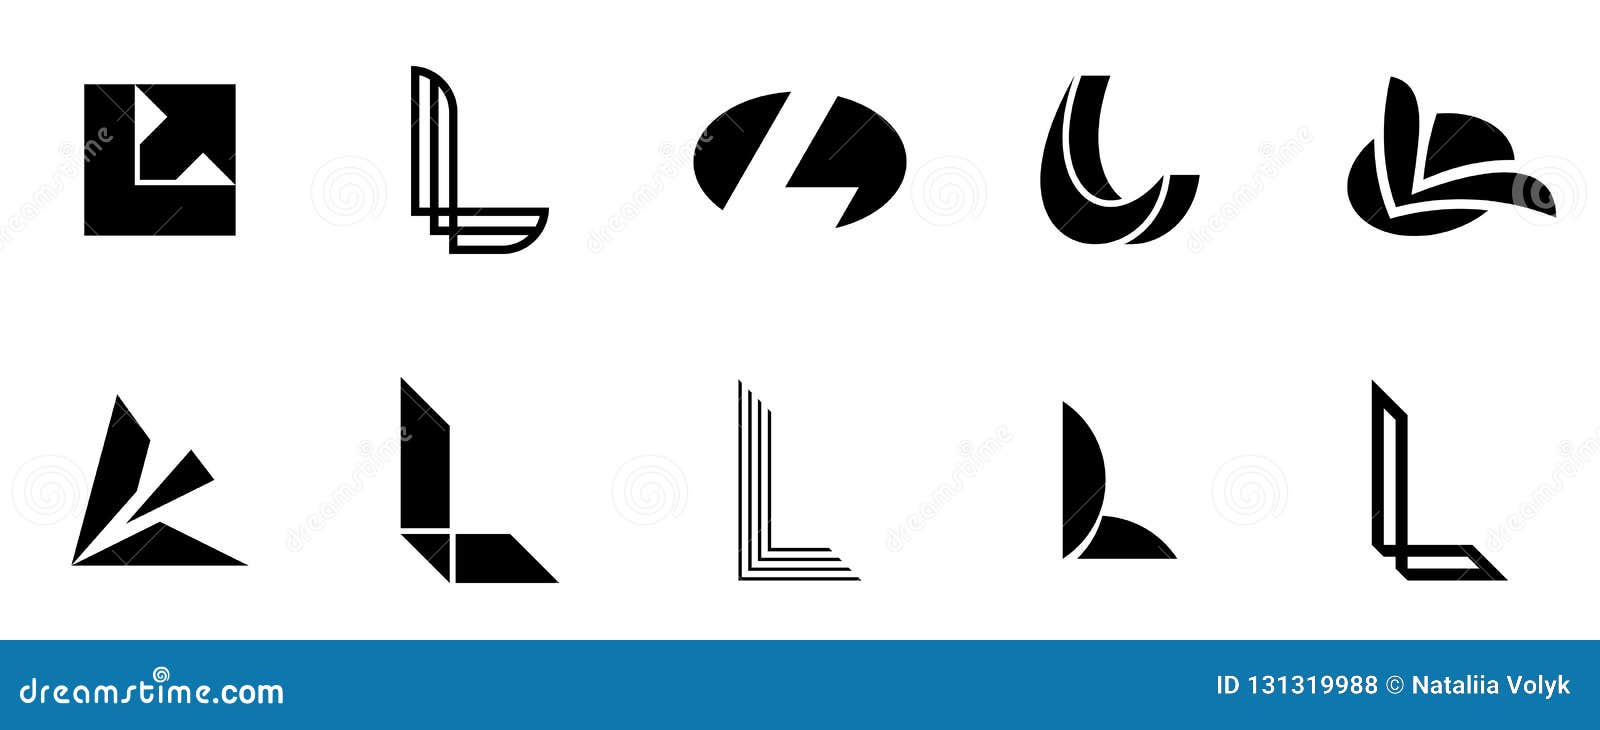 Set of letter L logo stock vector. Illustration of logo - 131319988